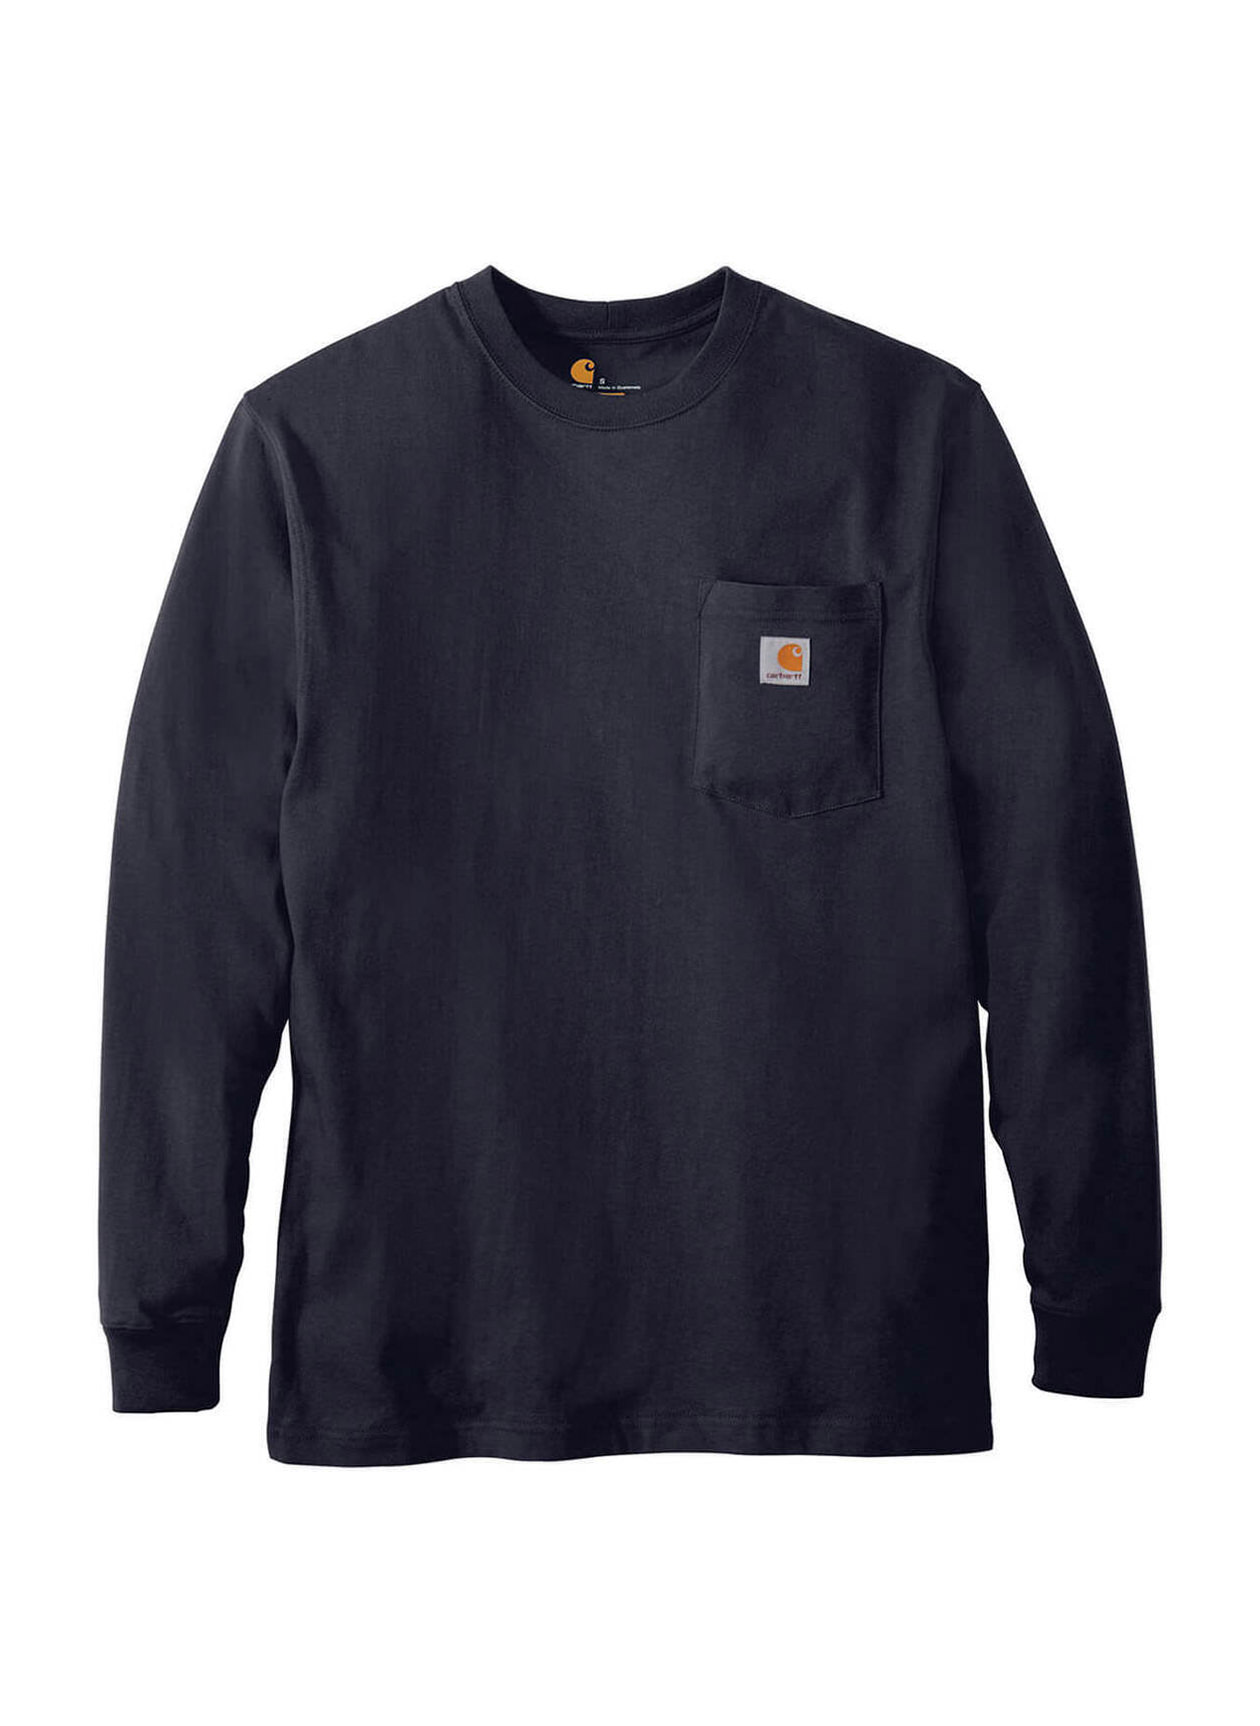 Carhartt Men's Navy Workwear Pocket Long-Sleeve T-Shirt